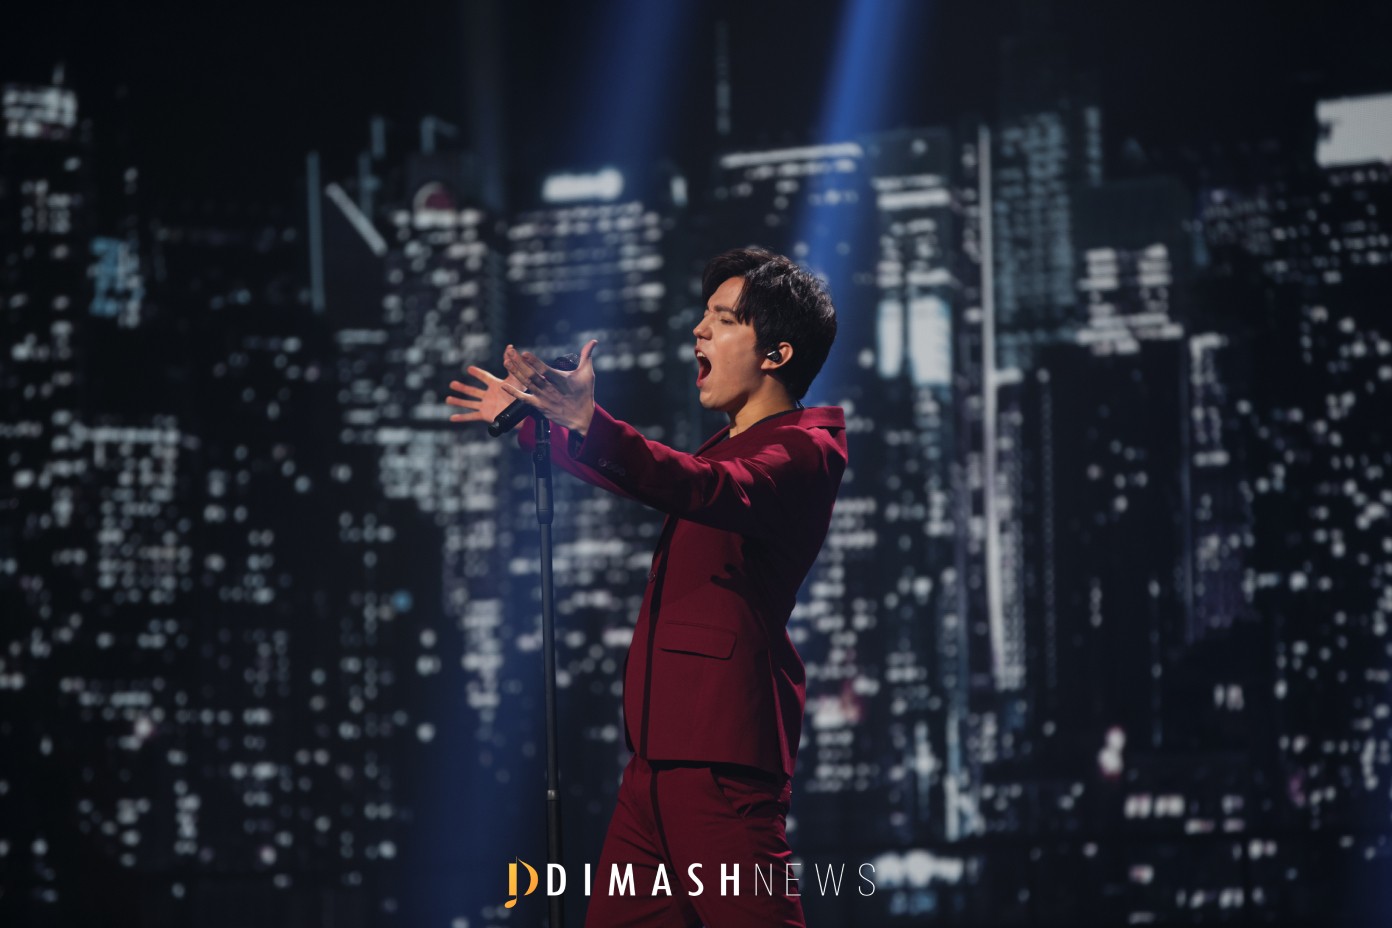 "DIMASH DIGITAL SHOW": How Dimash's First Online Concert was Prepared